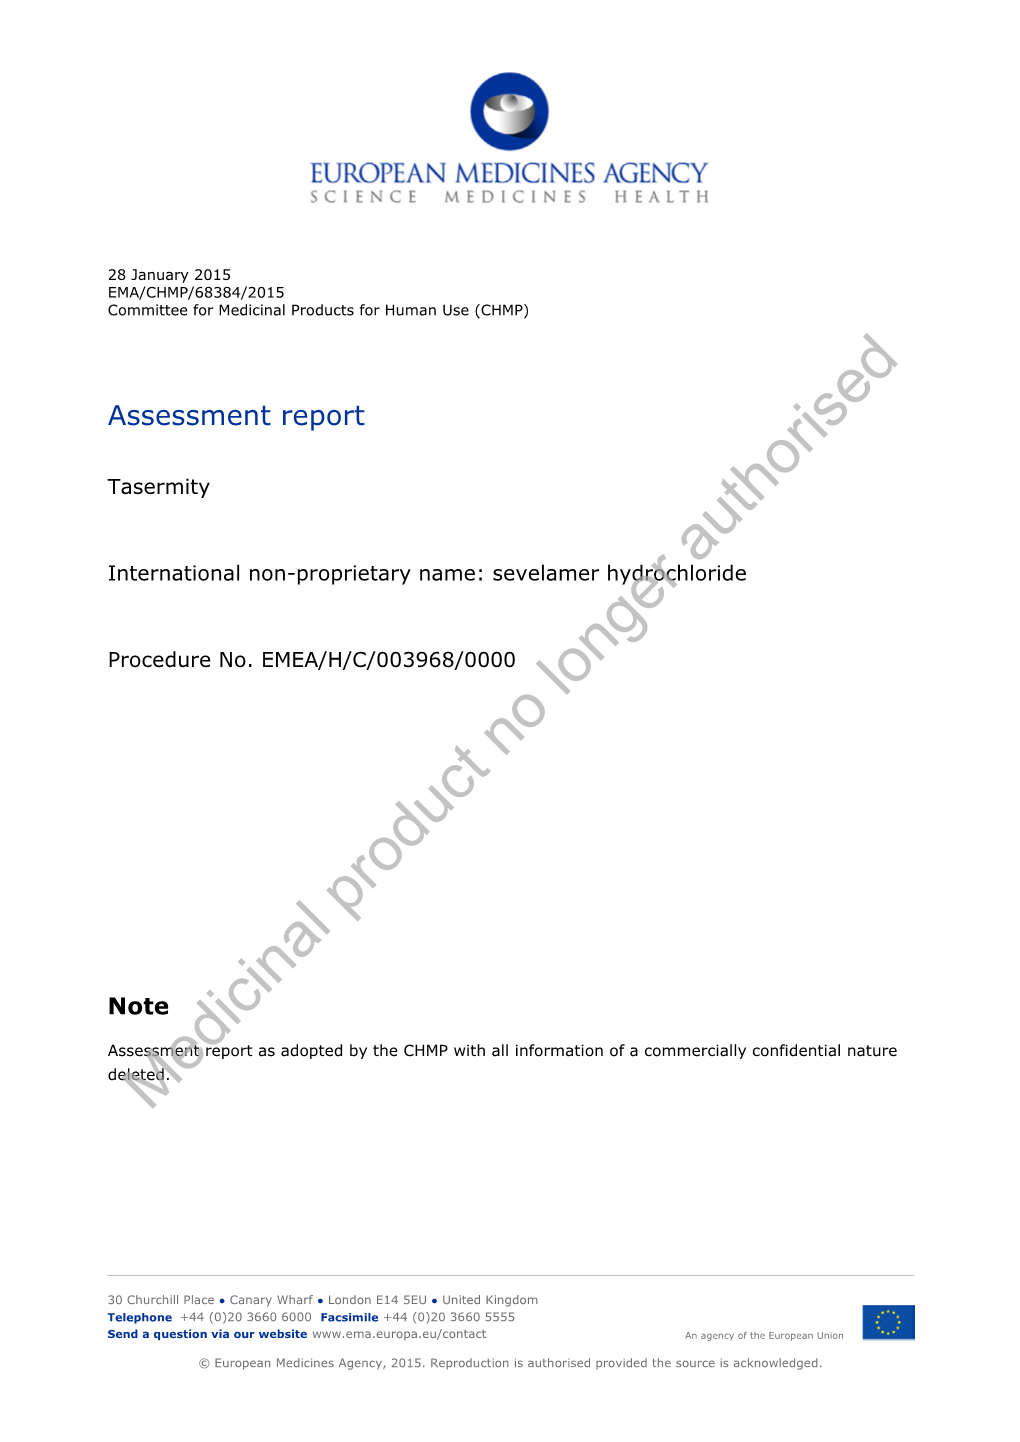 Public Assessment Report (EPAR) Published on the EMA Website